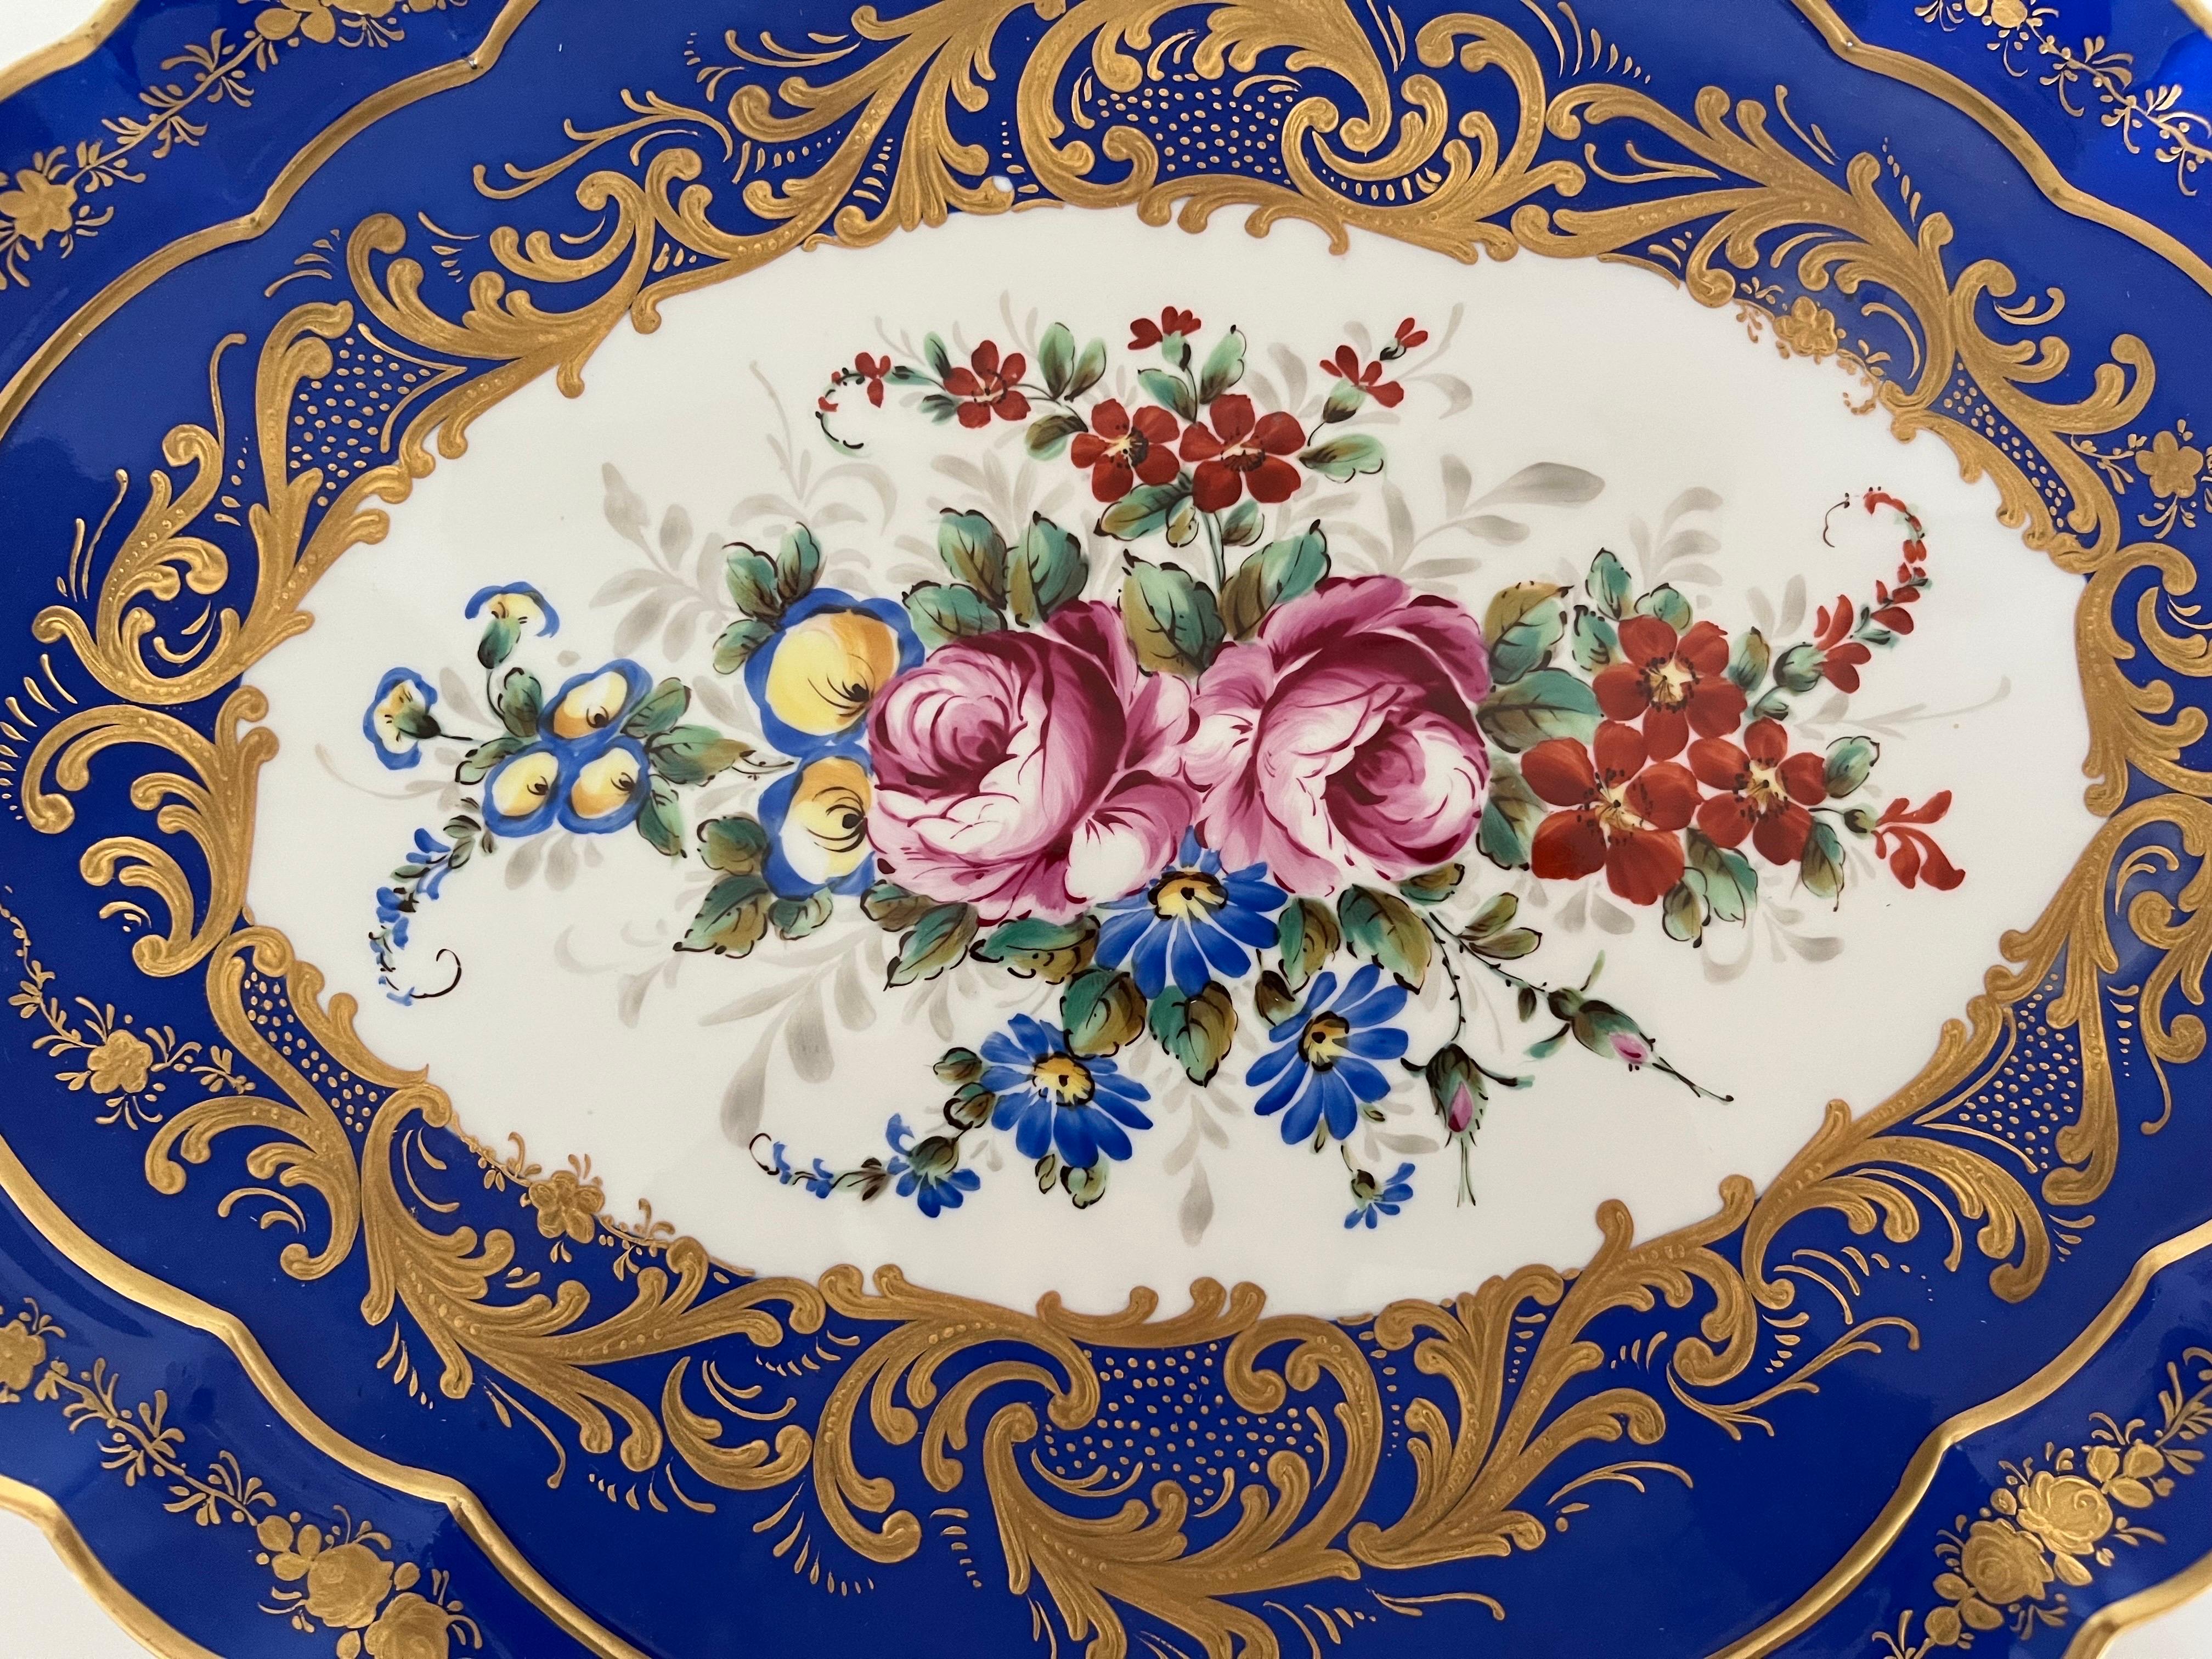 Ceramic Vassoio Blu Limoges France Decorato a mano del '900 -Antiques- For Sale